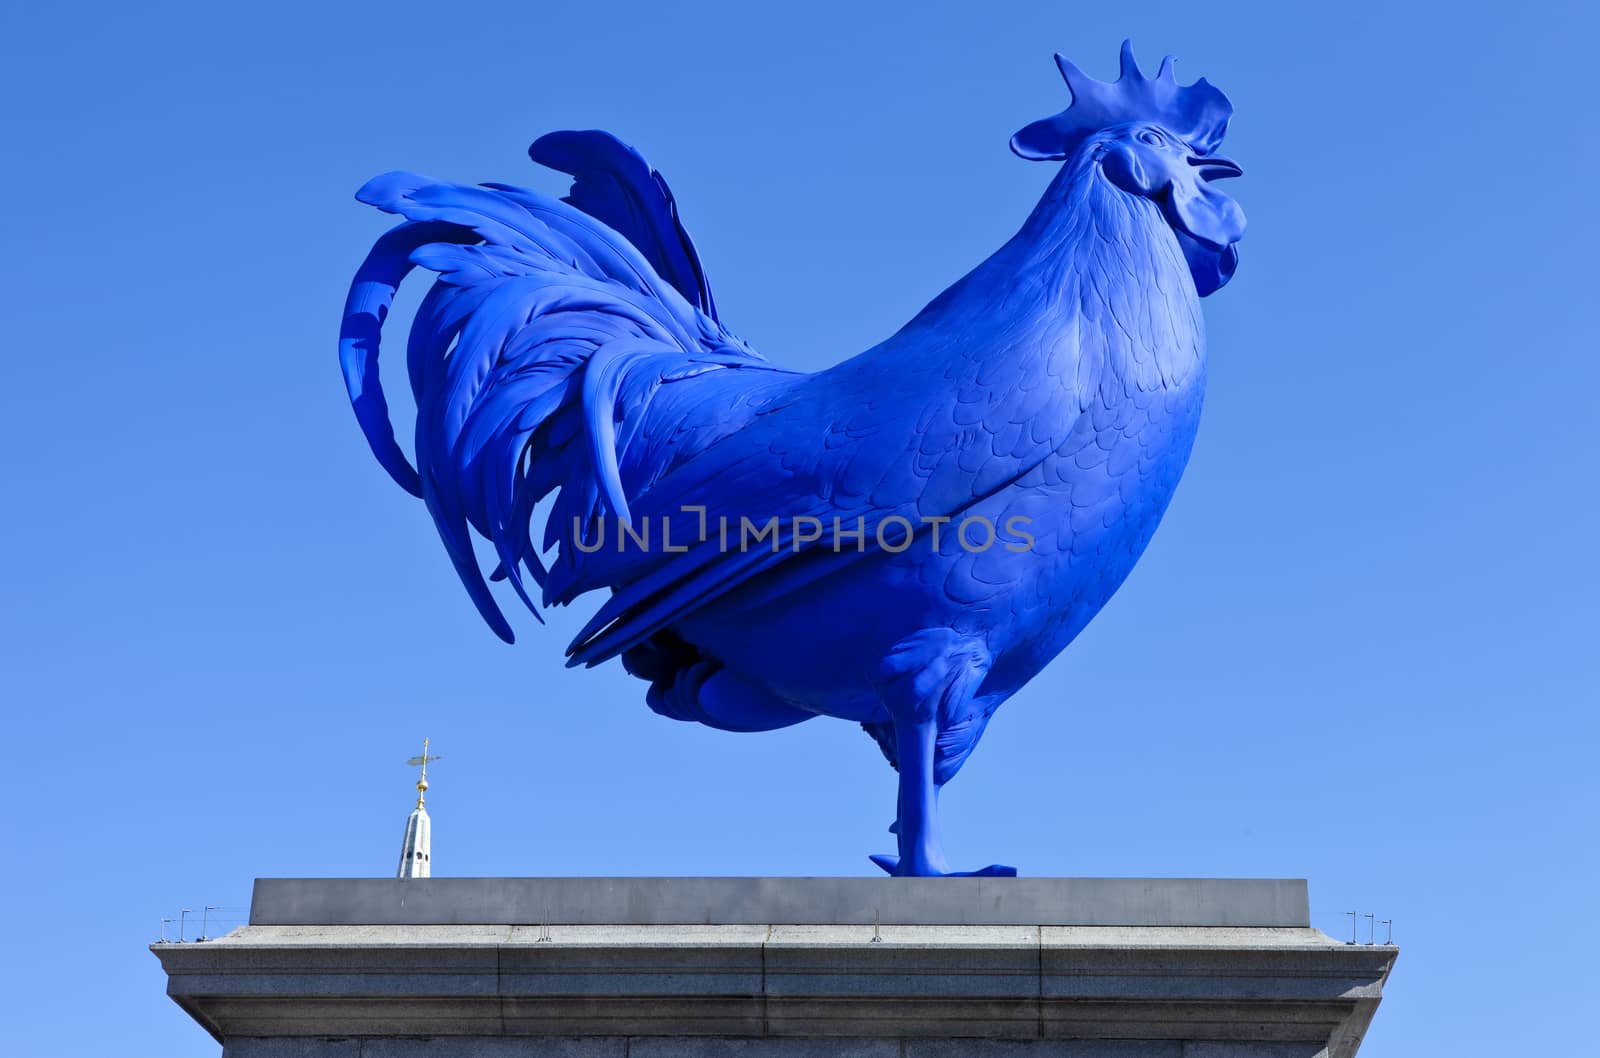 The Blue Cockerel on the fourth plinth in Trafalgar Square in London.